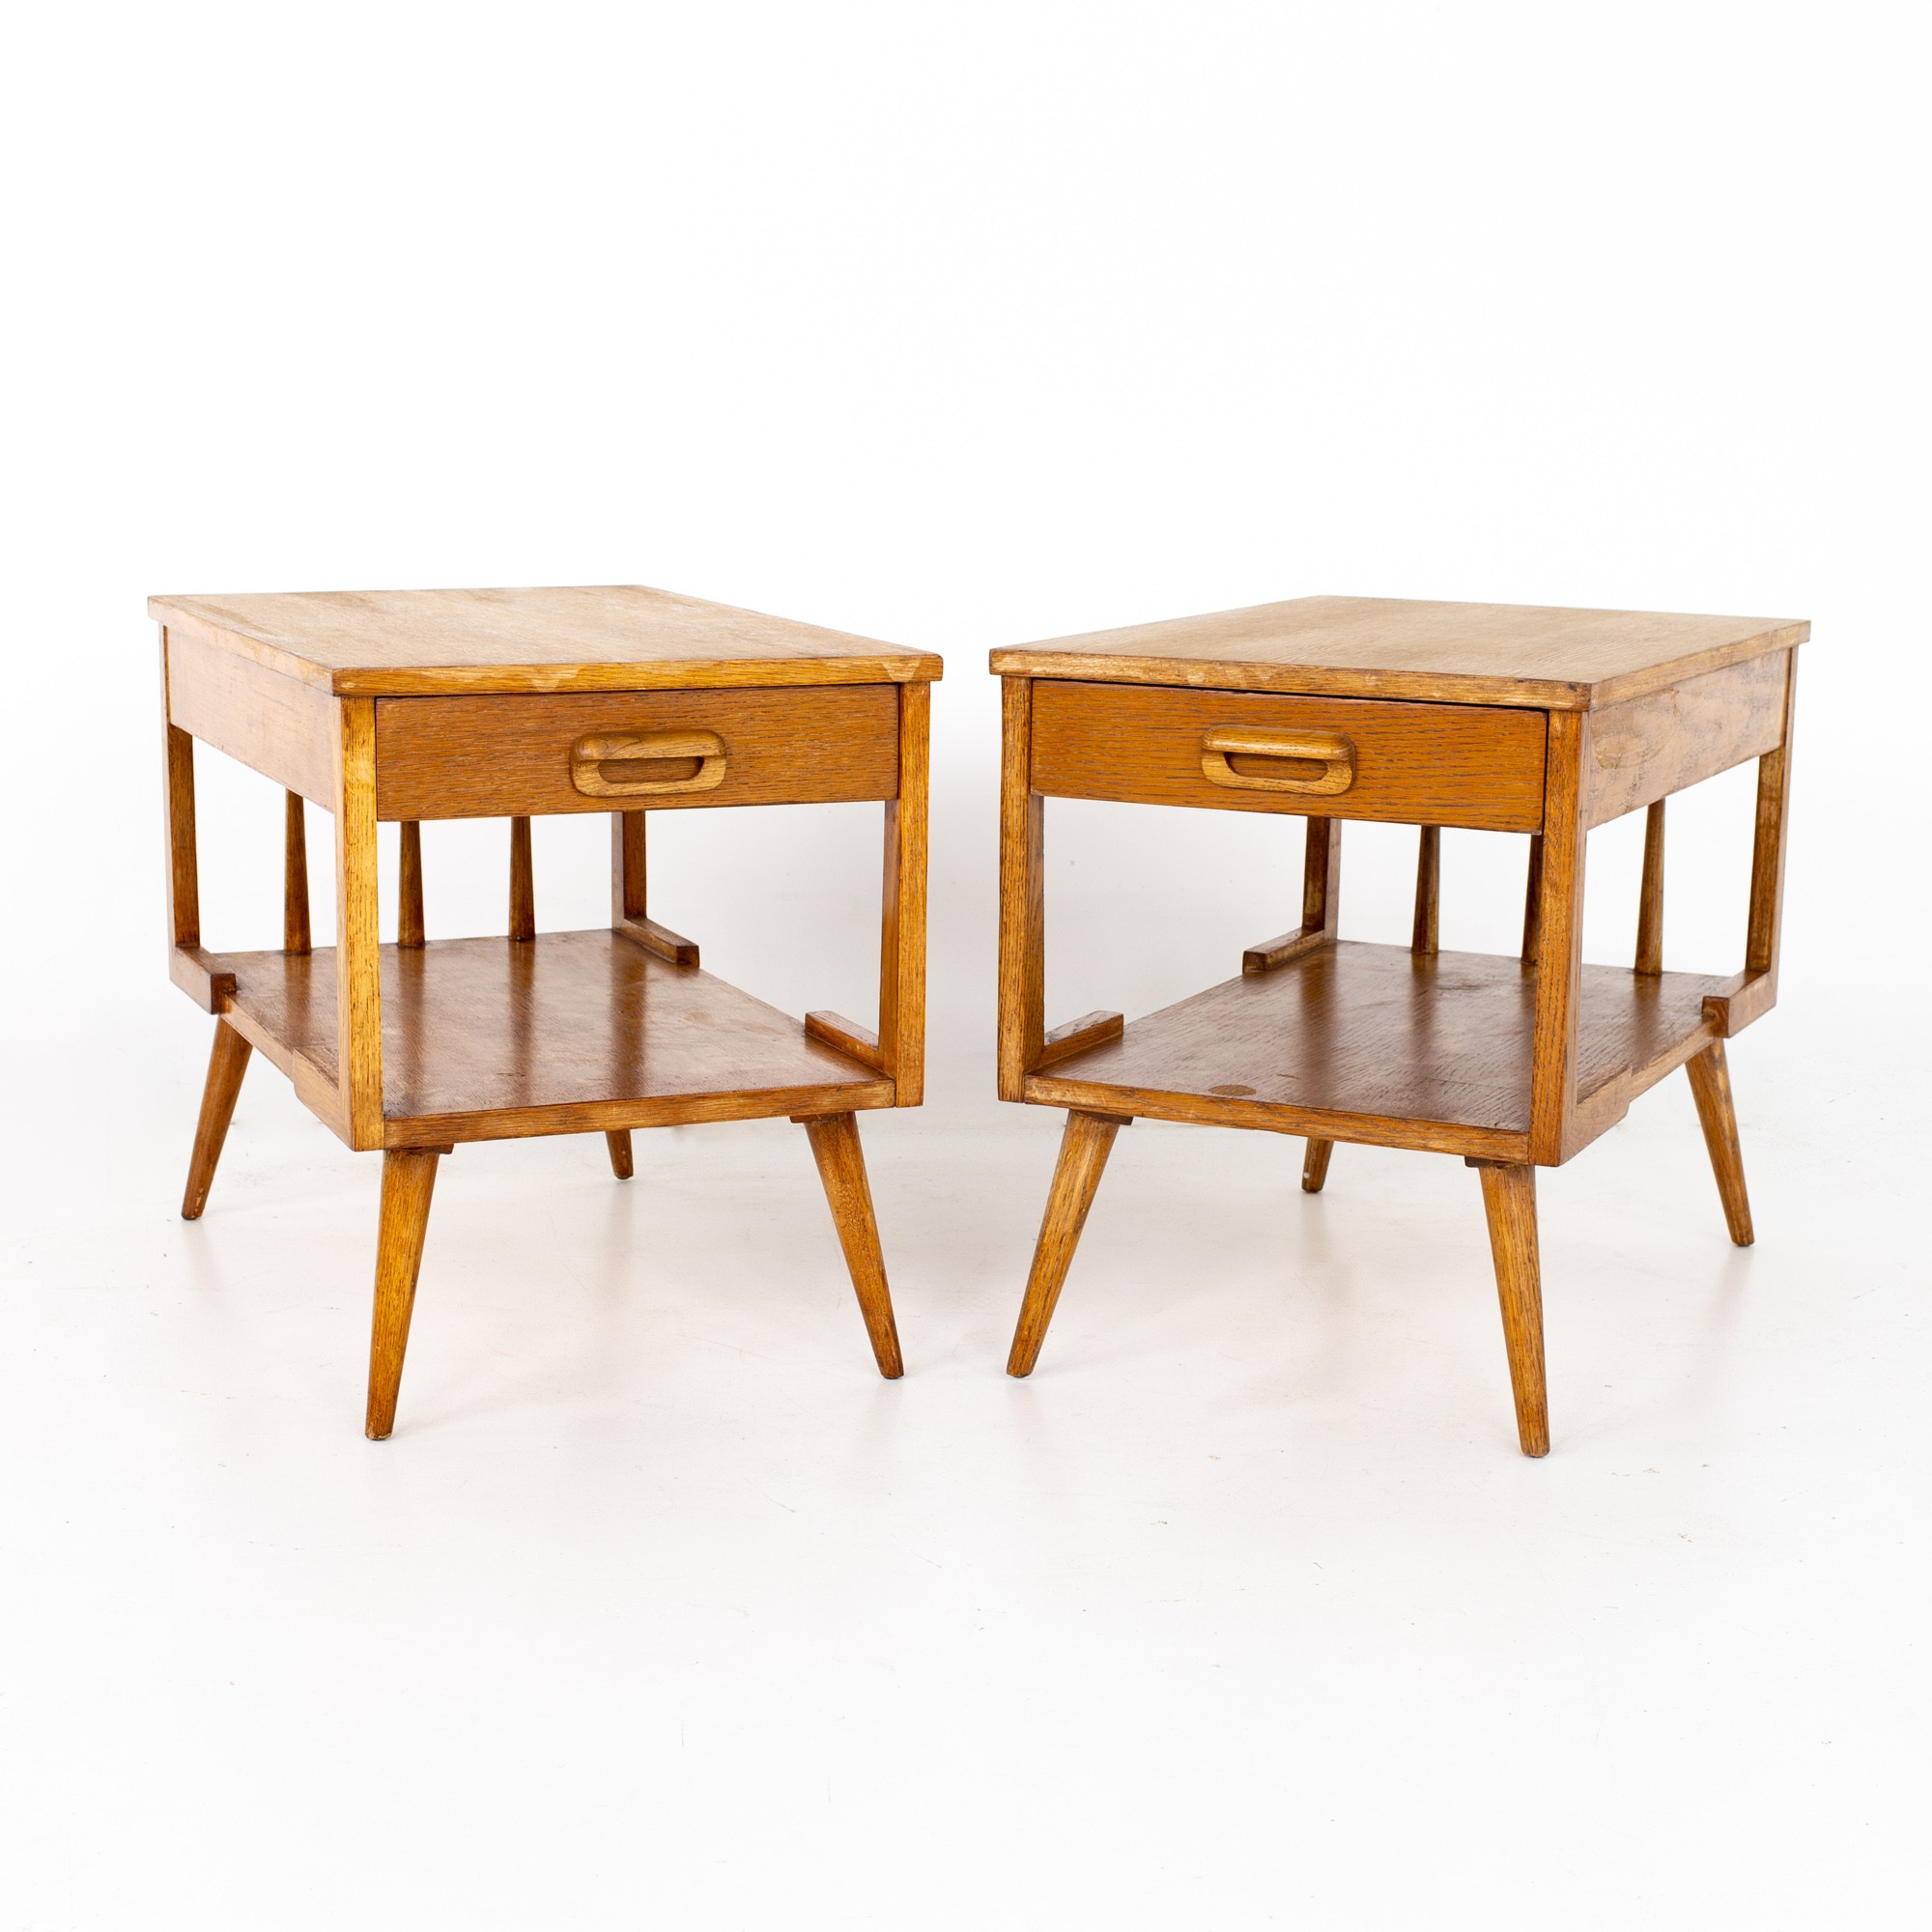 Mersman Mid Century Single Drawer Blonde Oak Nightstand Side End Tables - a Pair